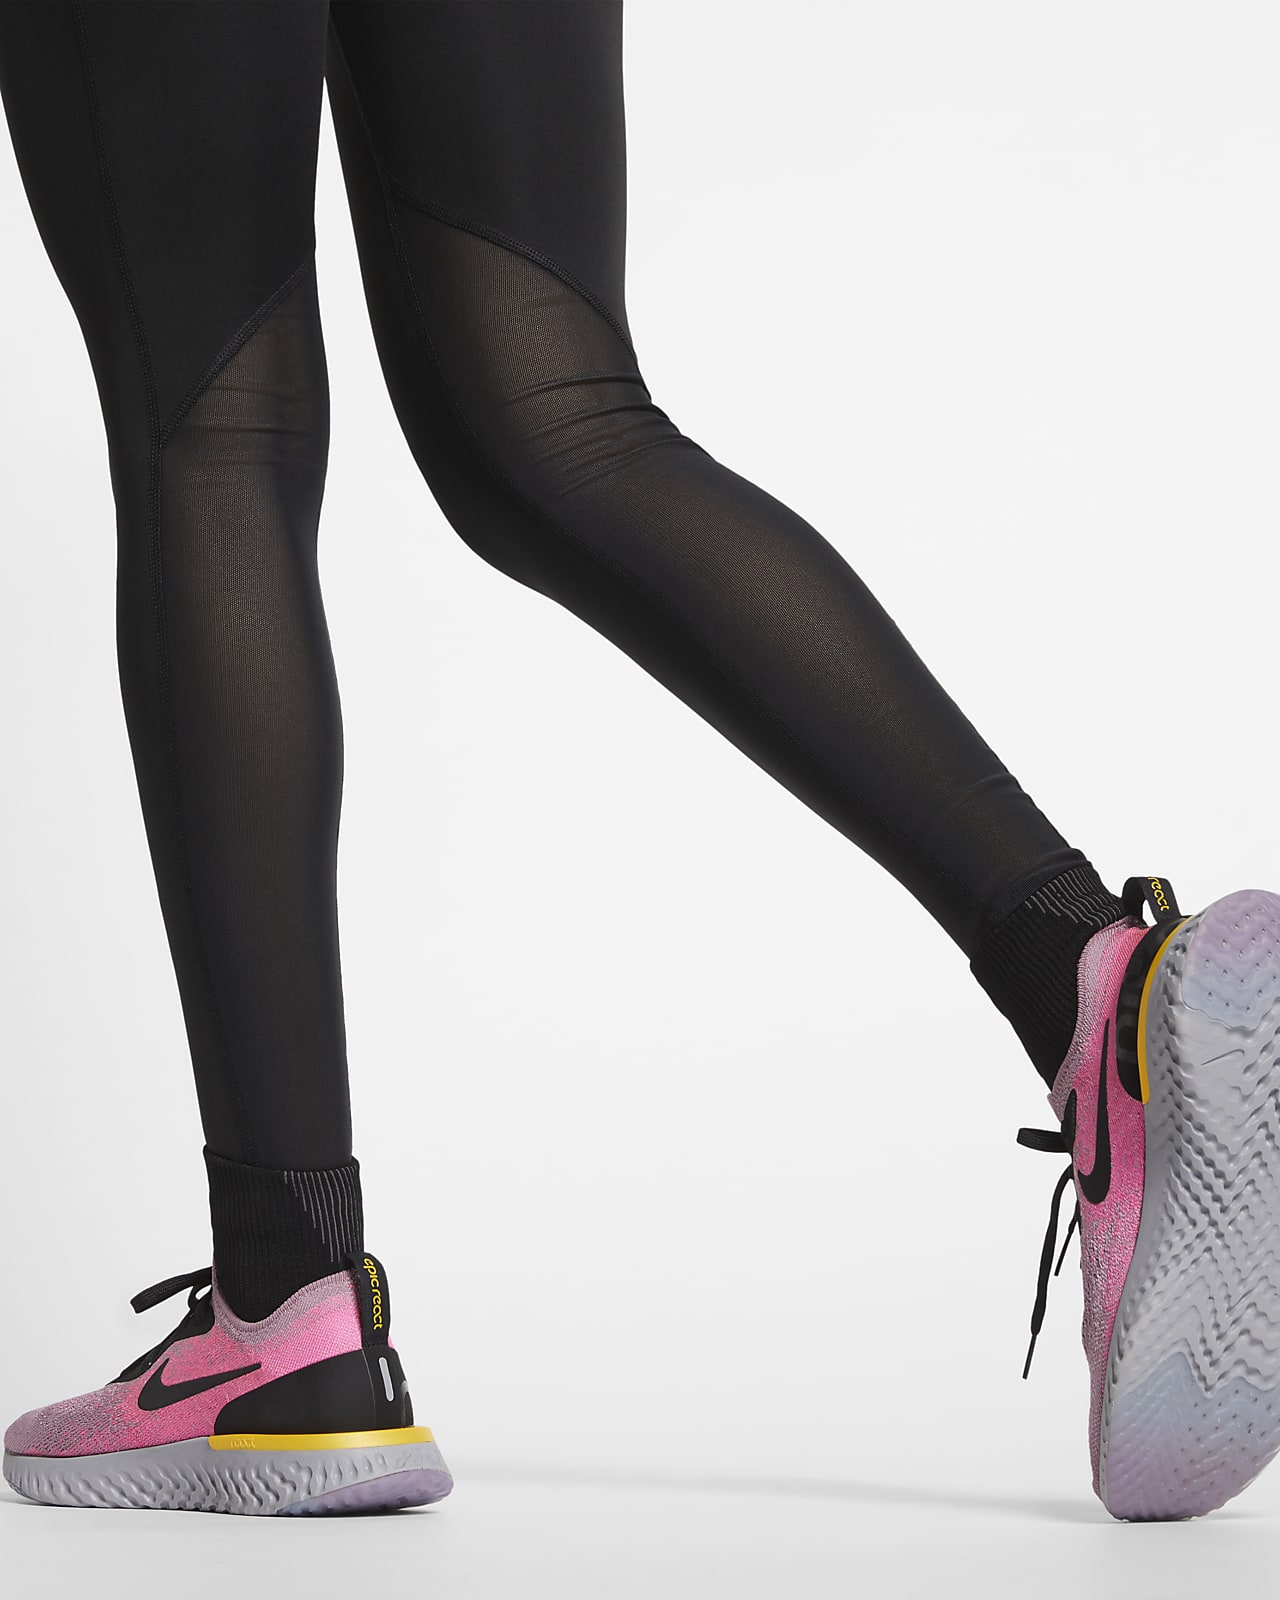 Nike Leggings de correr de cintura alta para mujer, color negro,  AT3103-010, talla M